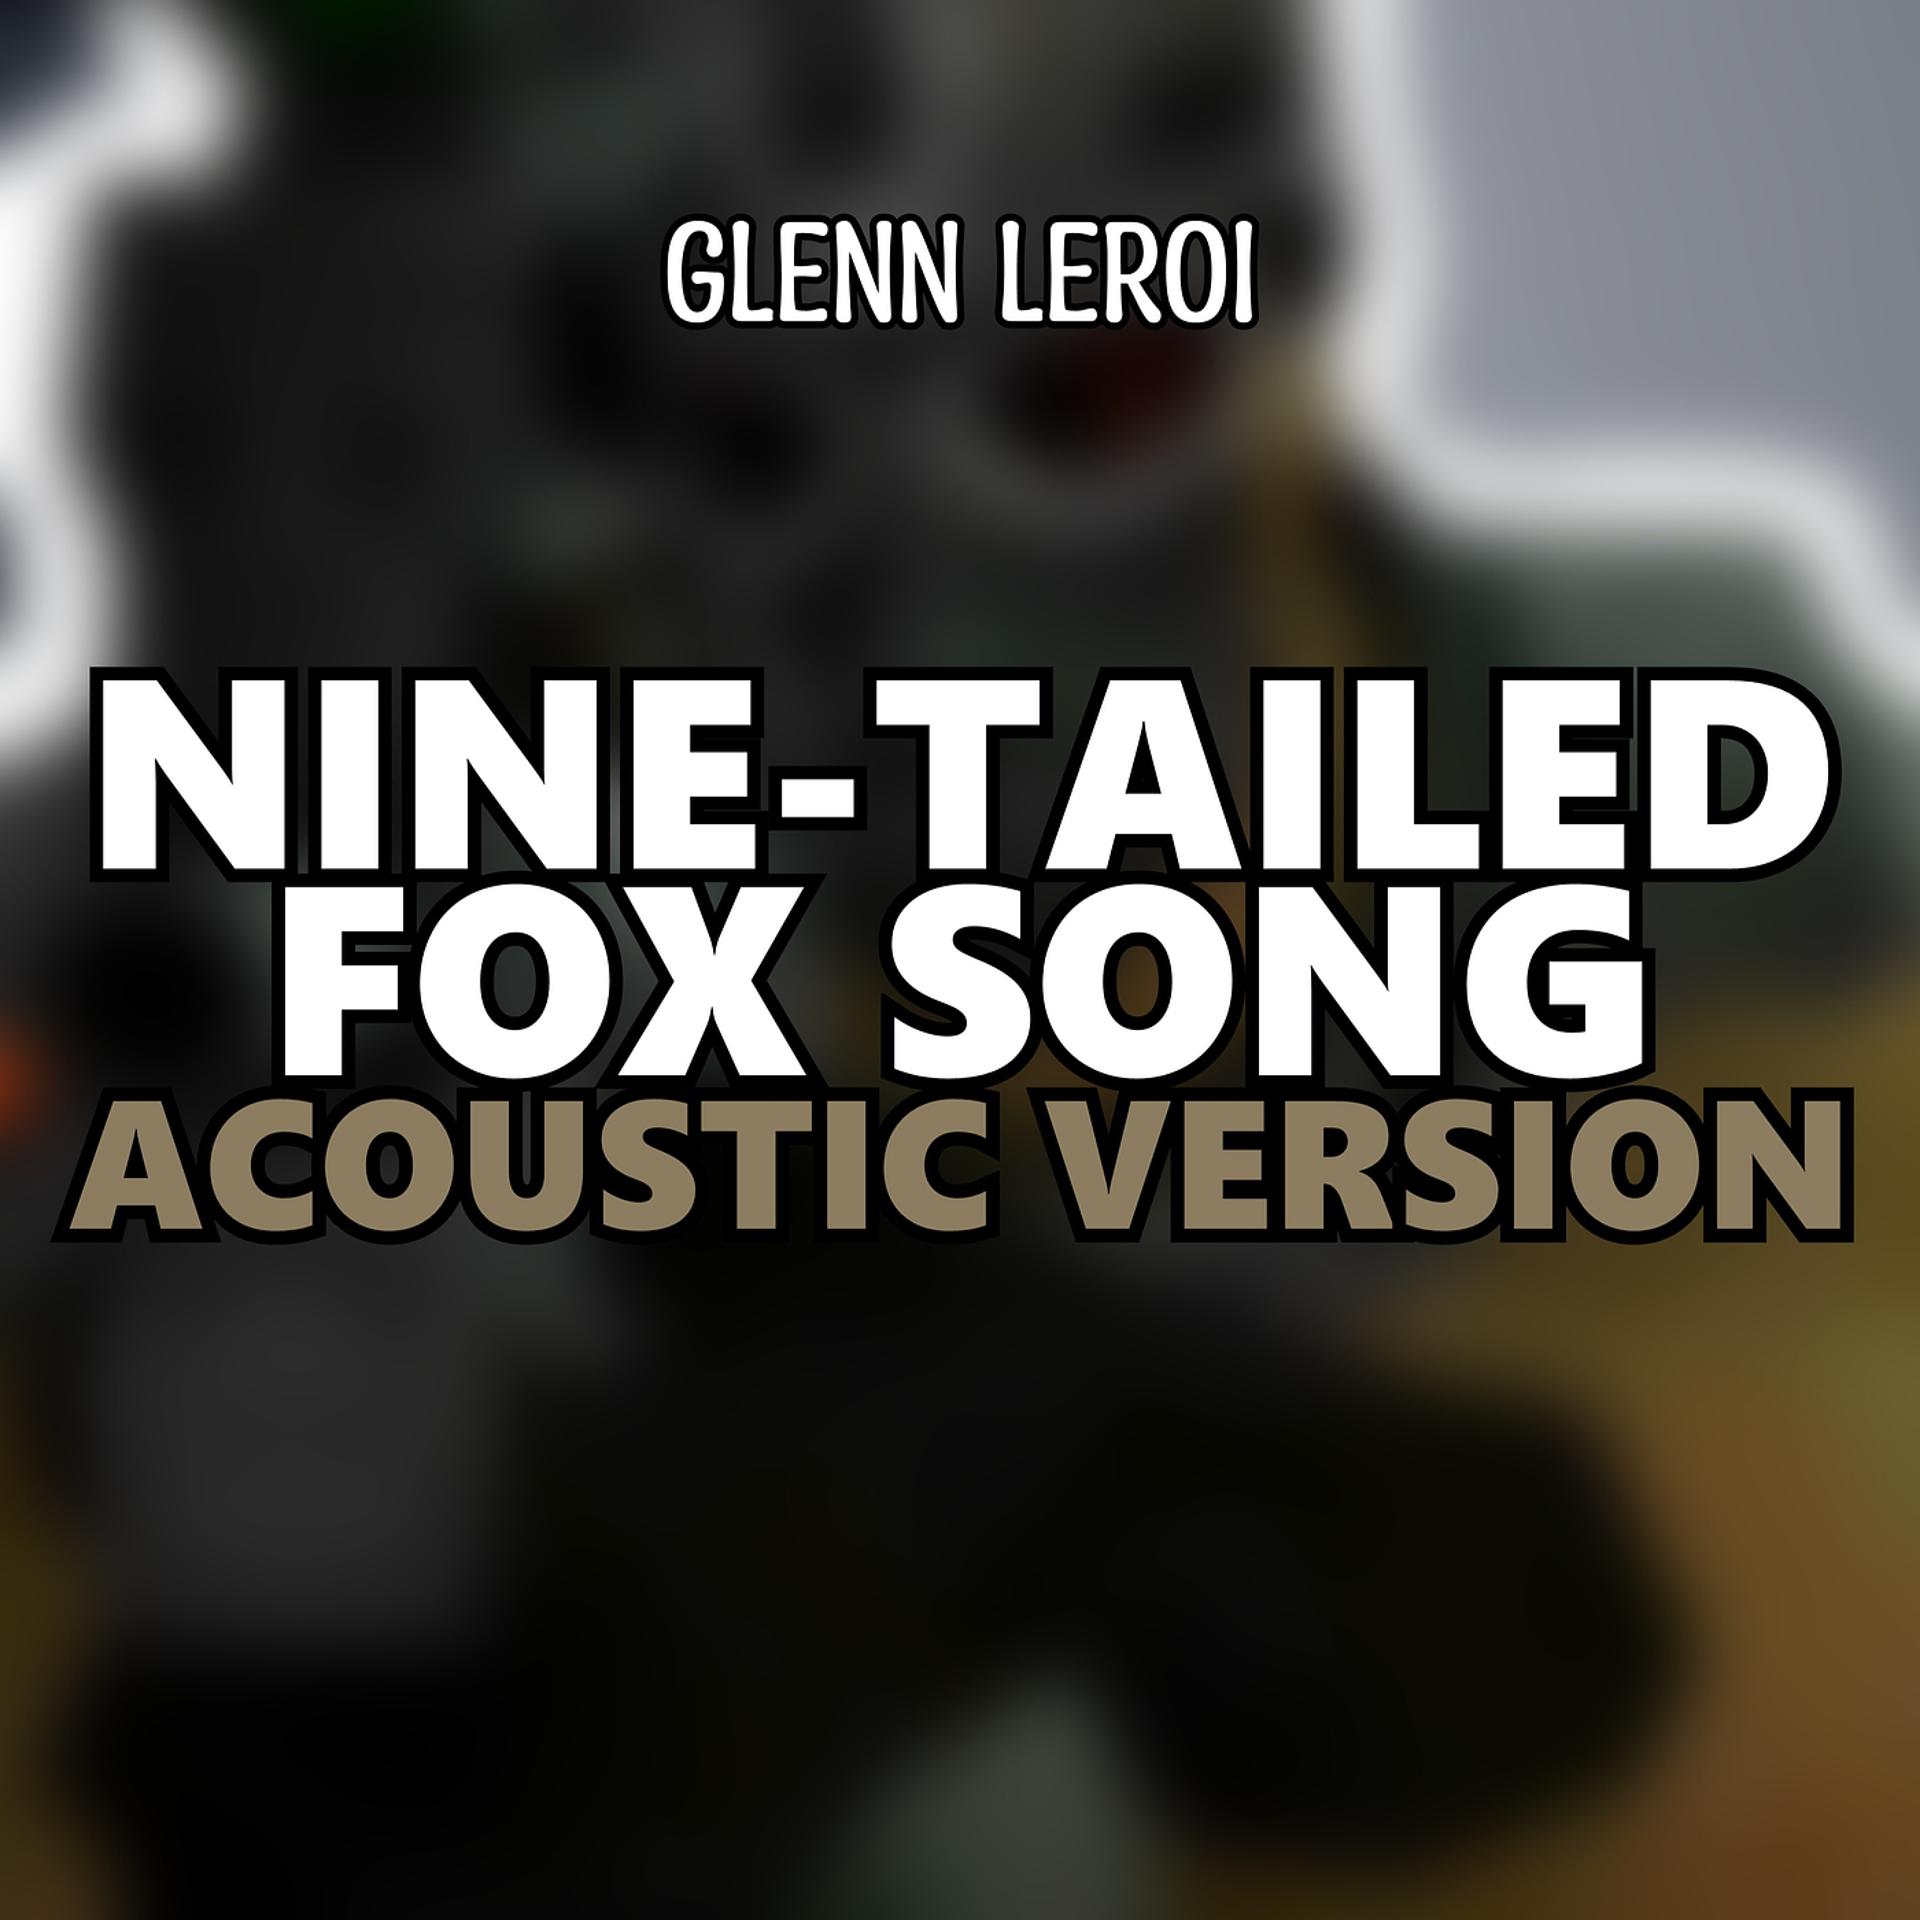 Постер к треку Glenn Leroi - Nine-Tailed Fox Song (Acoustic Version)